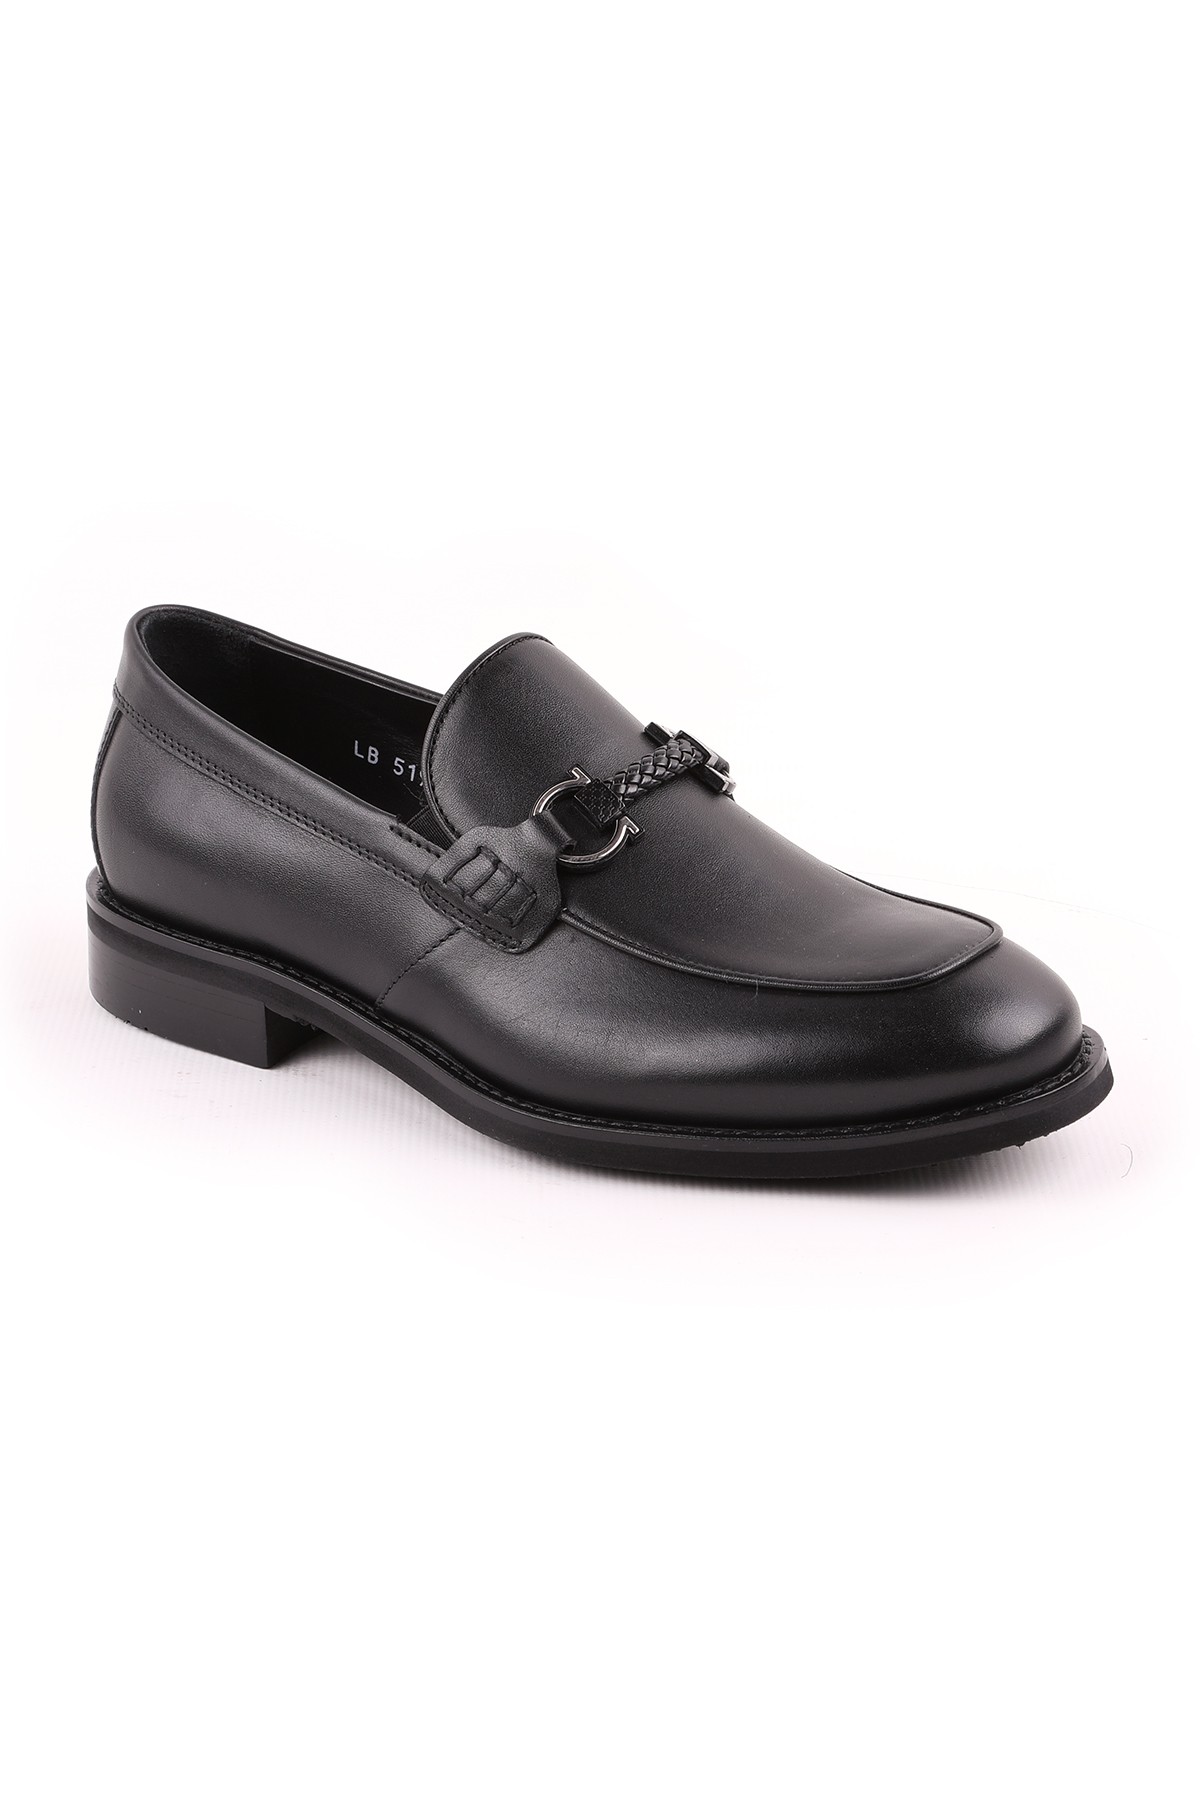 Libero L5191 Loafer Erkek Ayakkabı KAHVE - Siyah